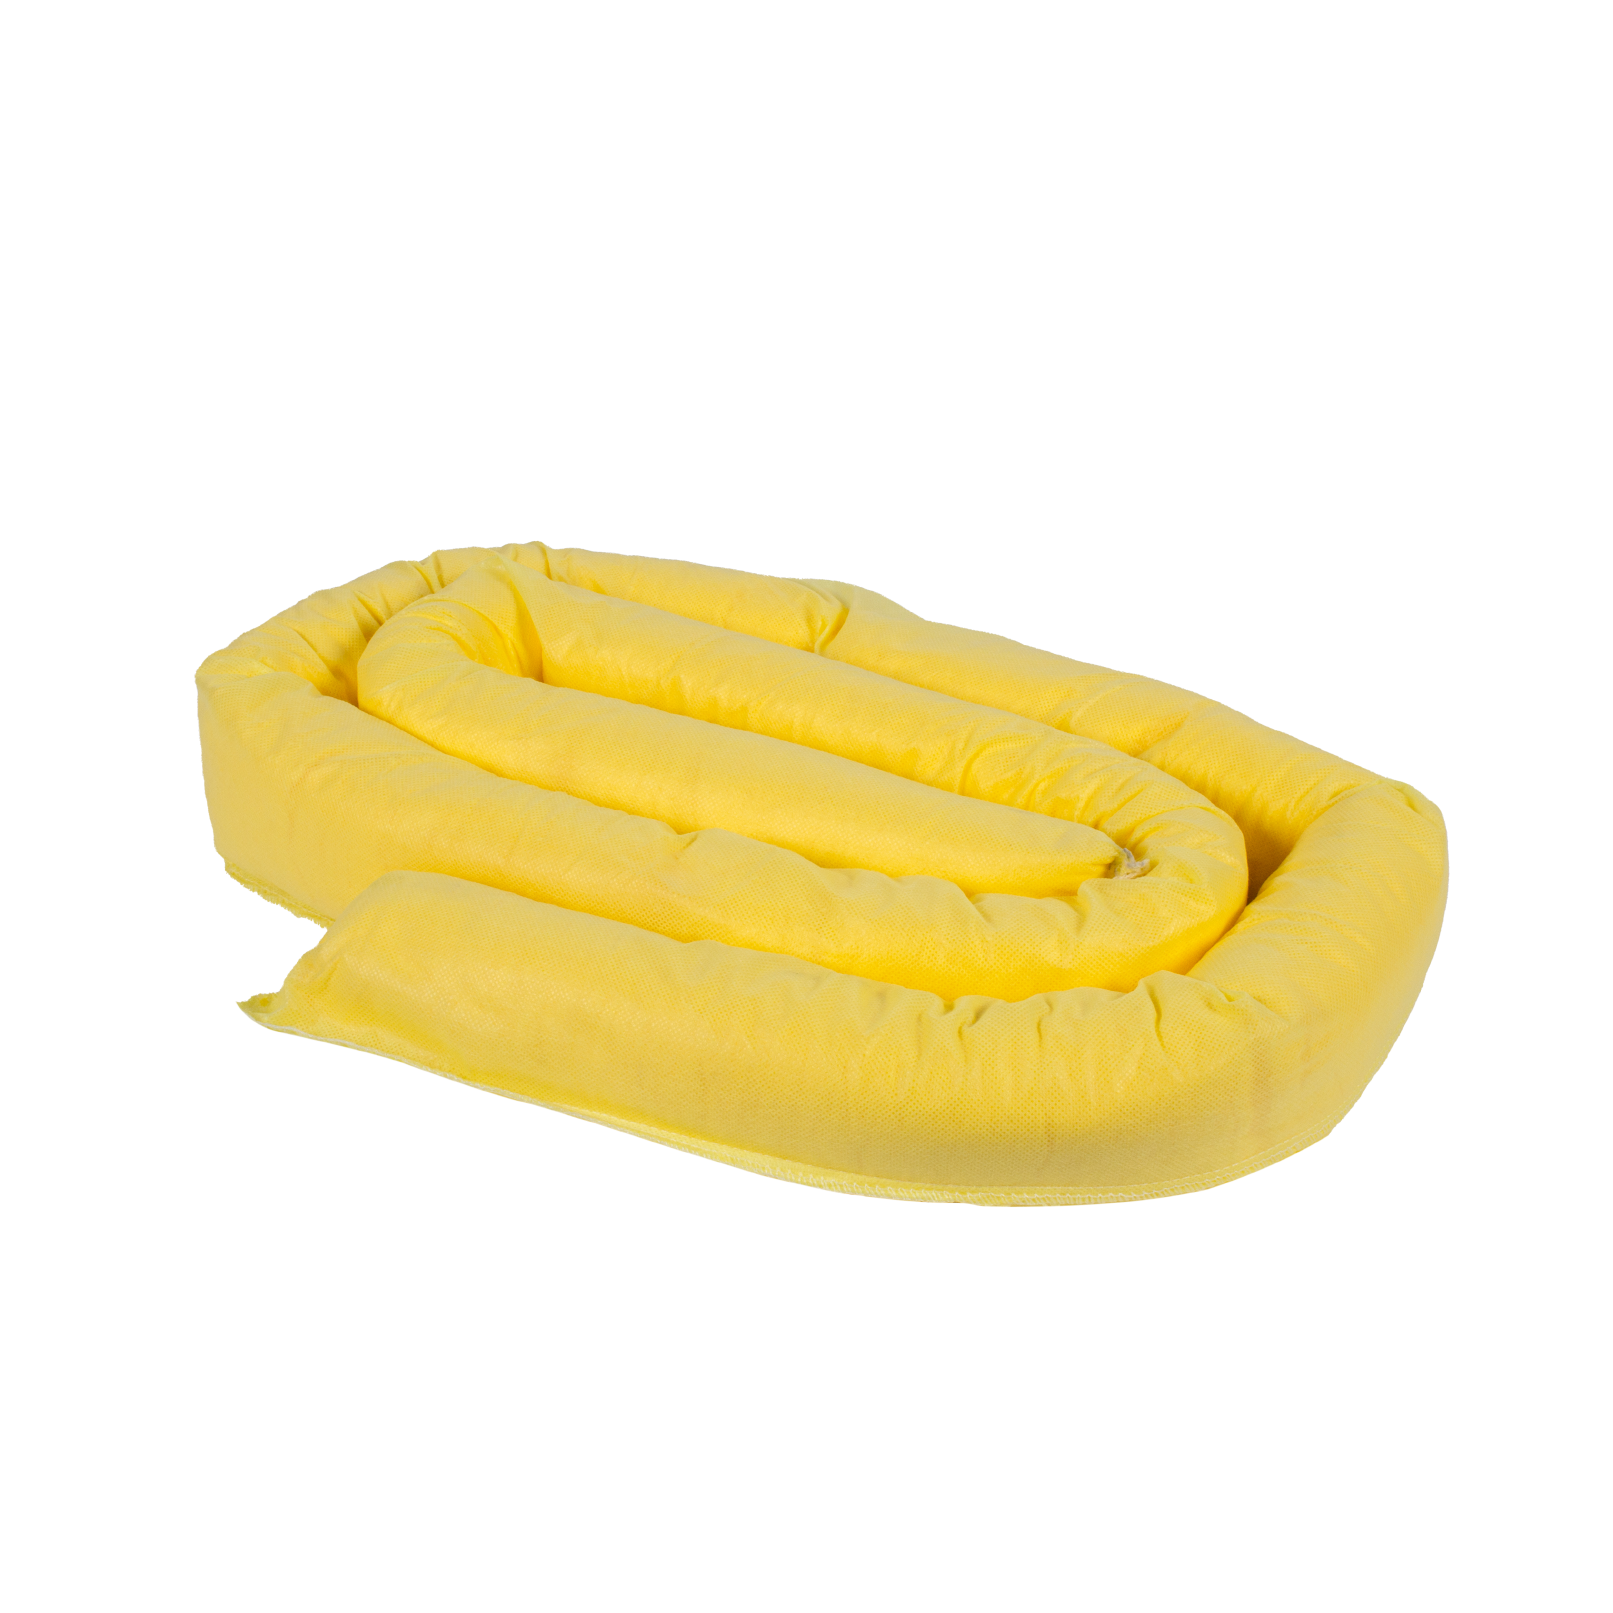 Chemical Absorbent Socks ท่อนดูดซับน้ำมัน สีเหลือง